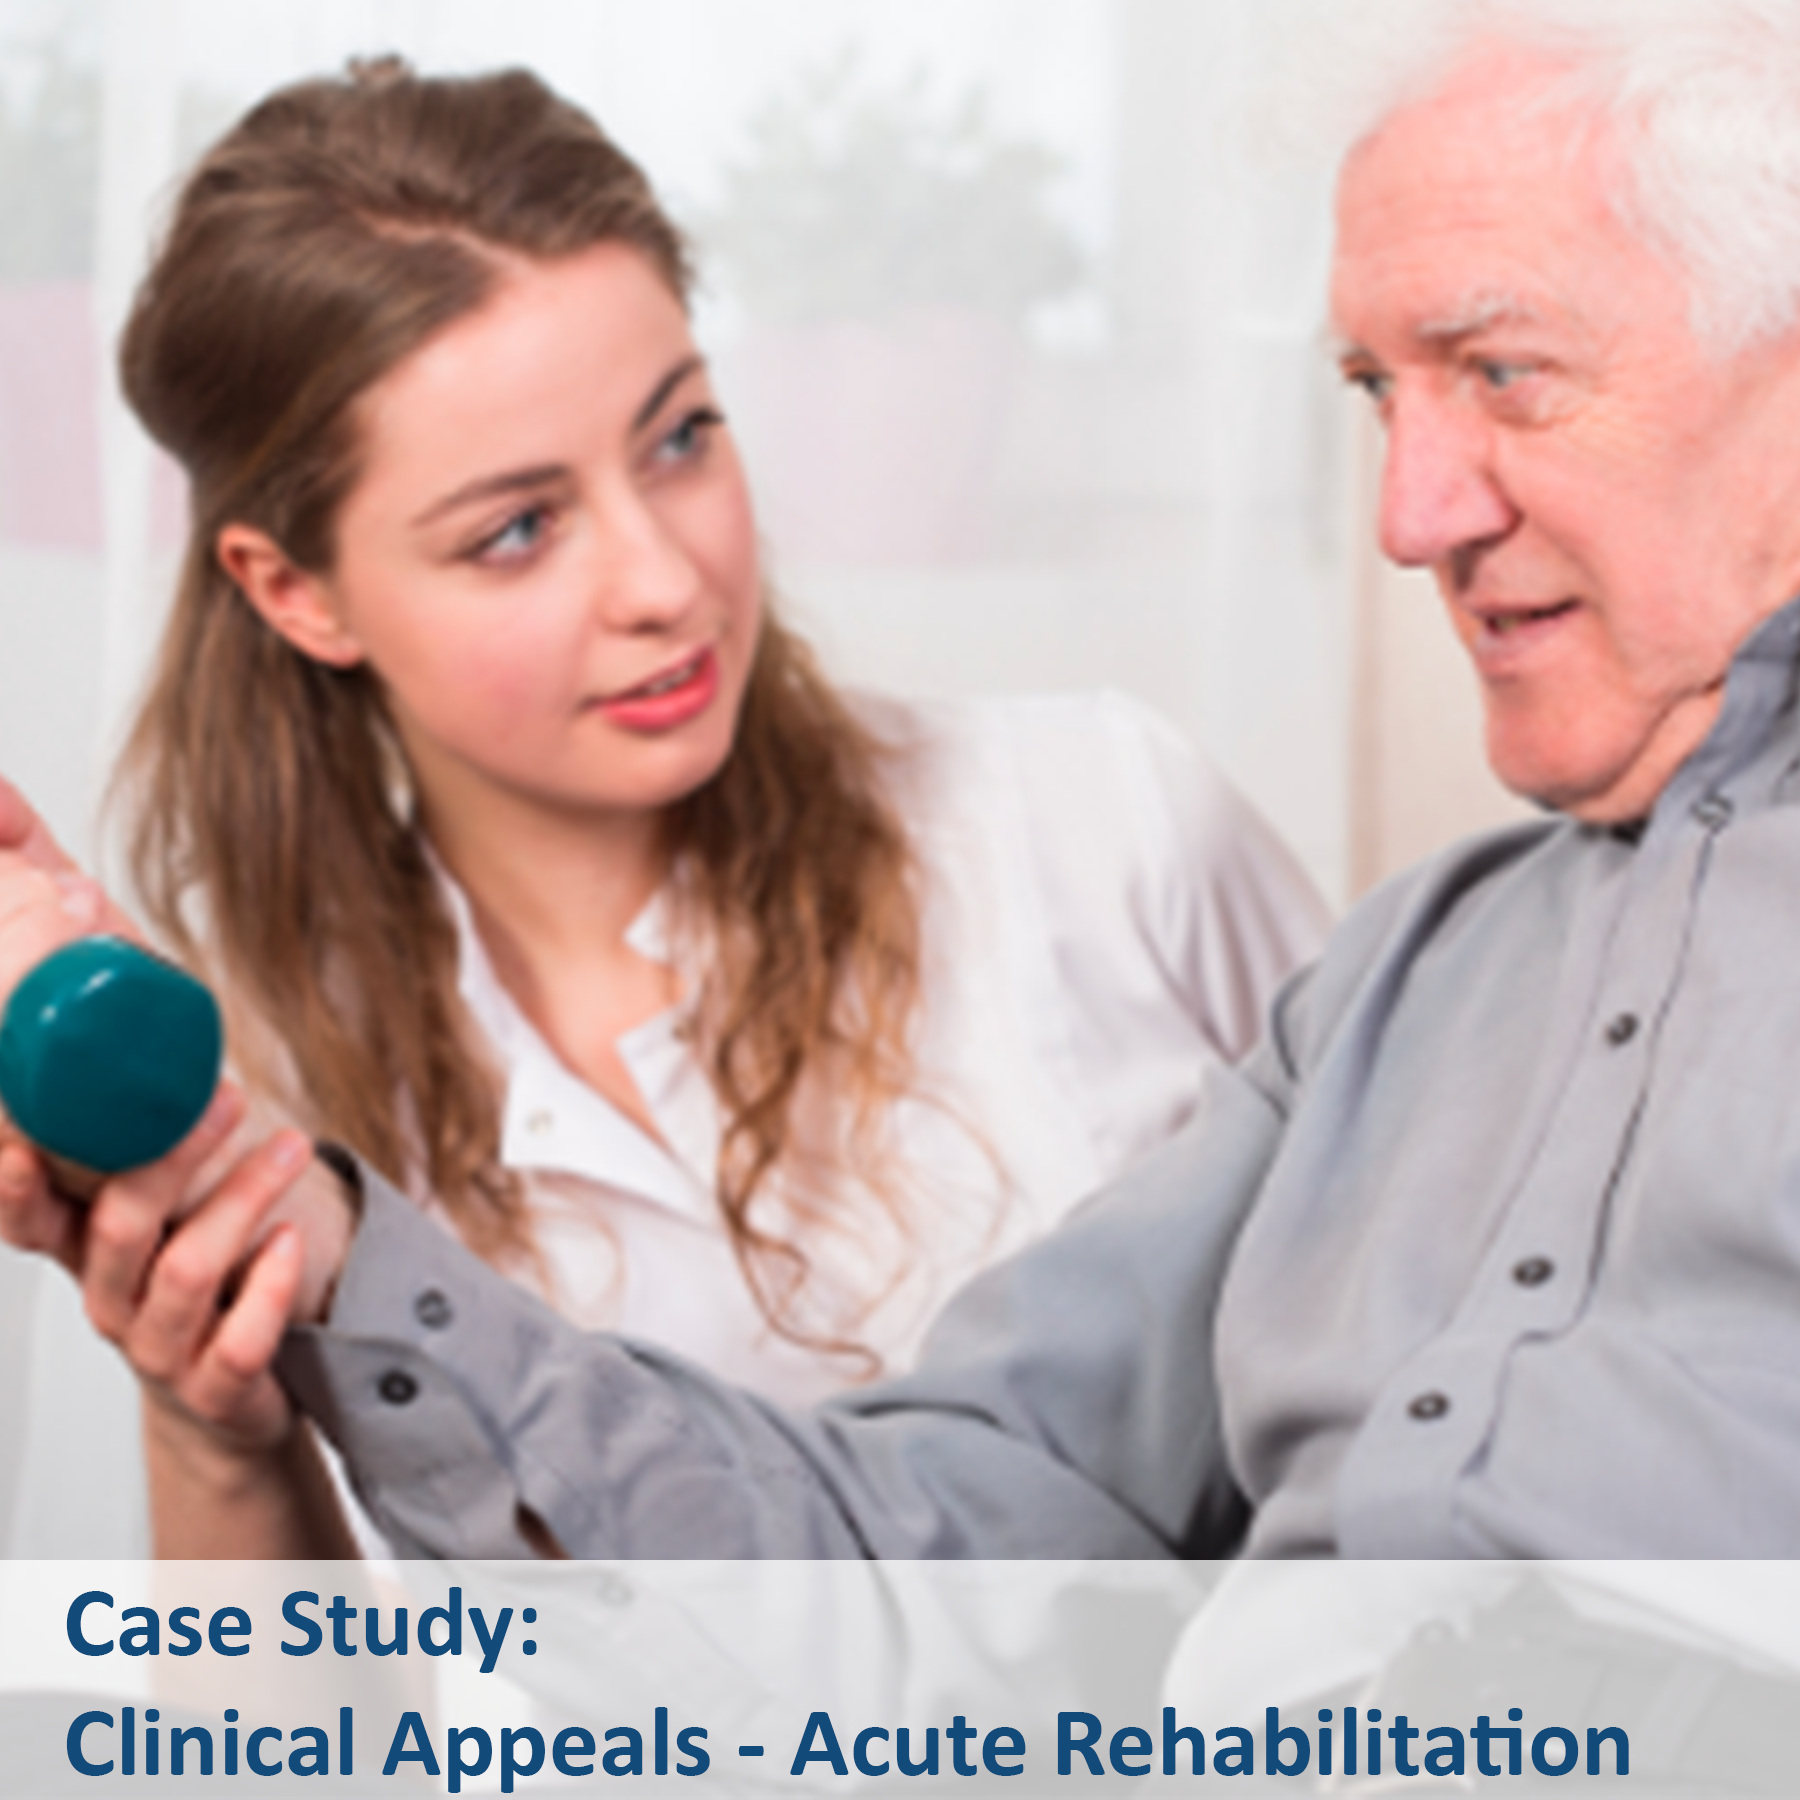 Case Study - Clinical Appeals - Acute Rehabilitation